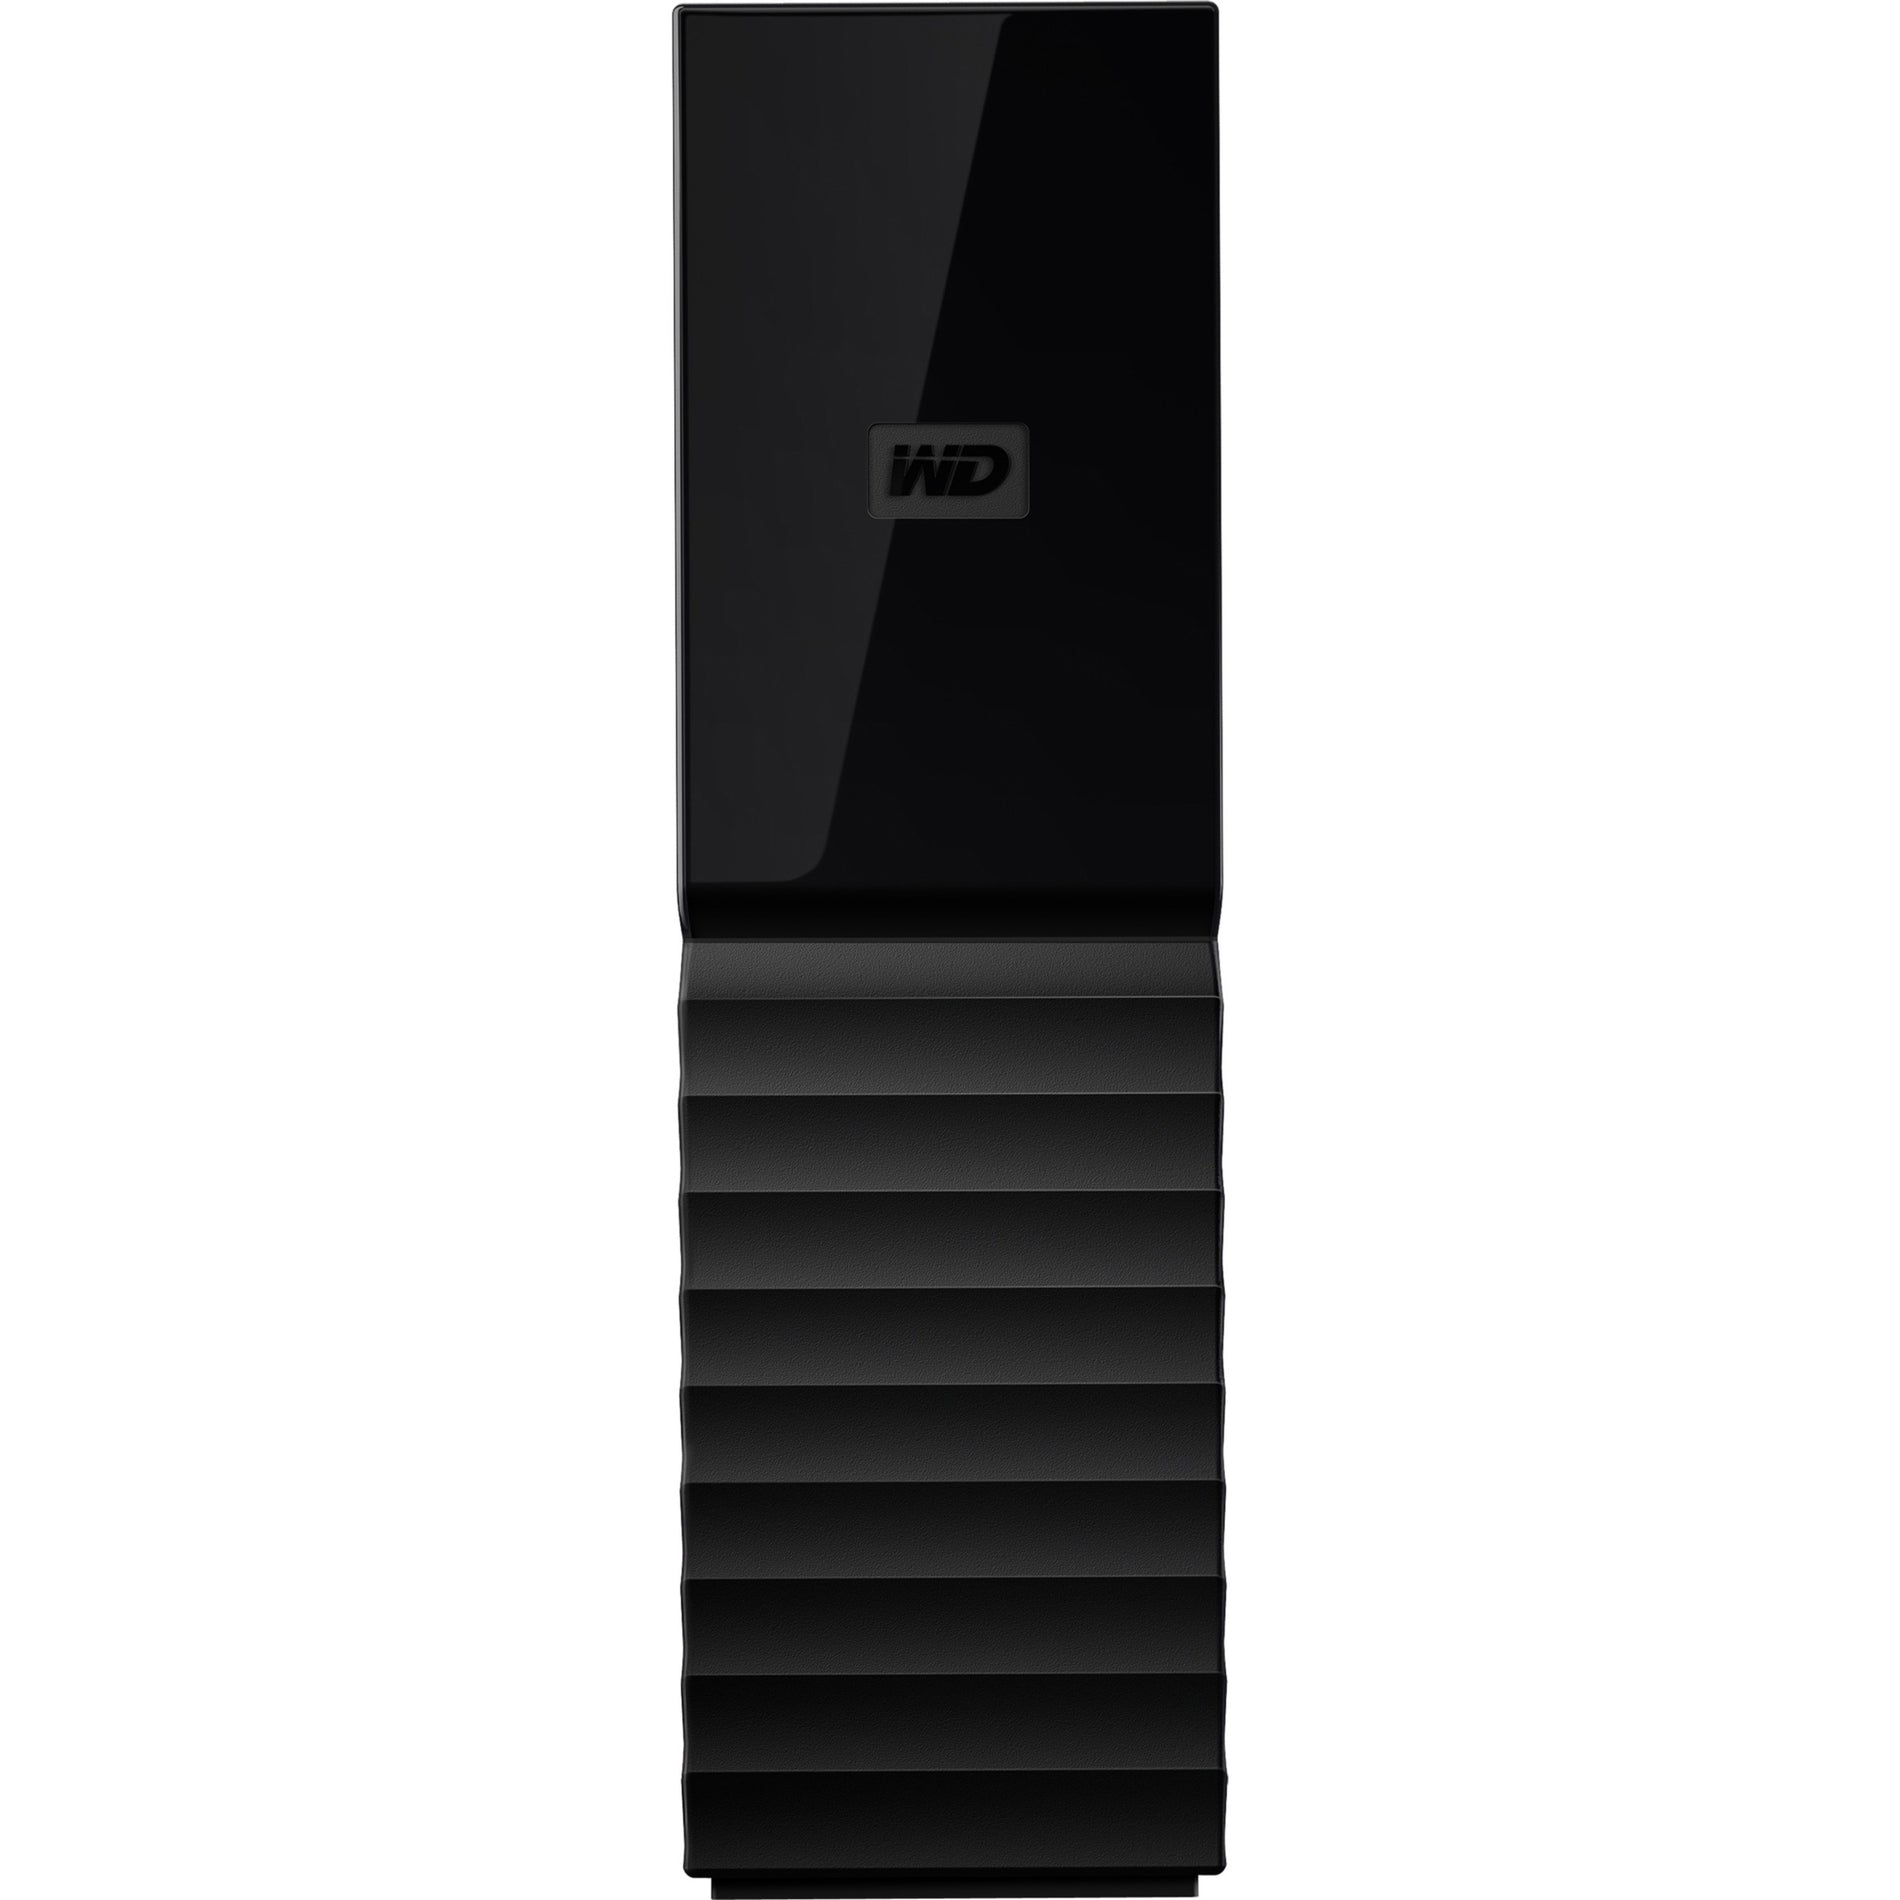 WD WDBBGB0040HBK-NESN My Book 4TB Desktop Hard Drive, USB 3.0, 3 Year Warranty